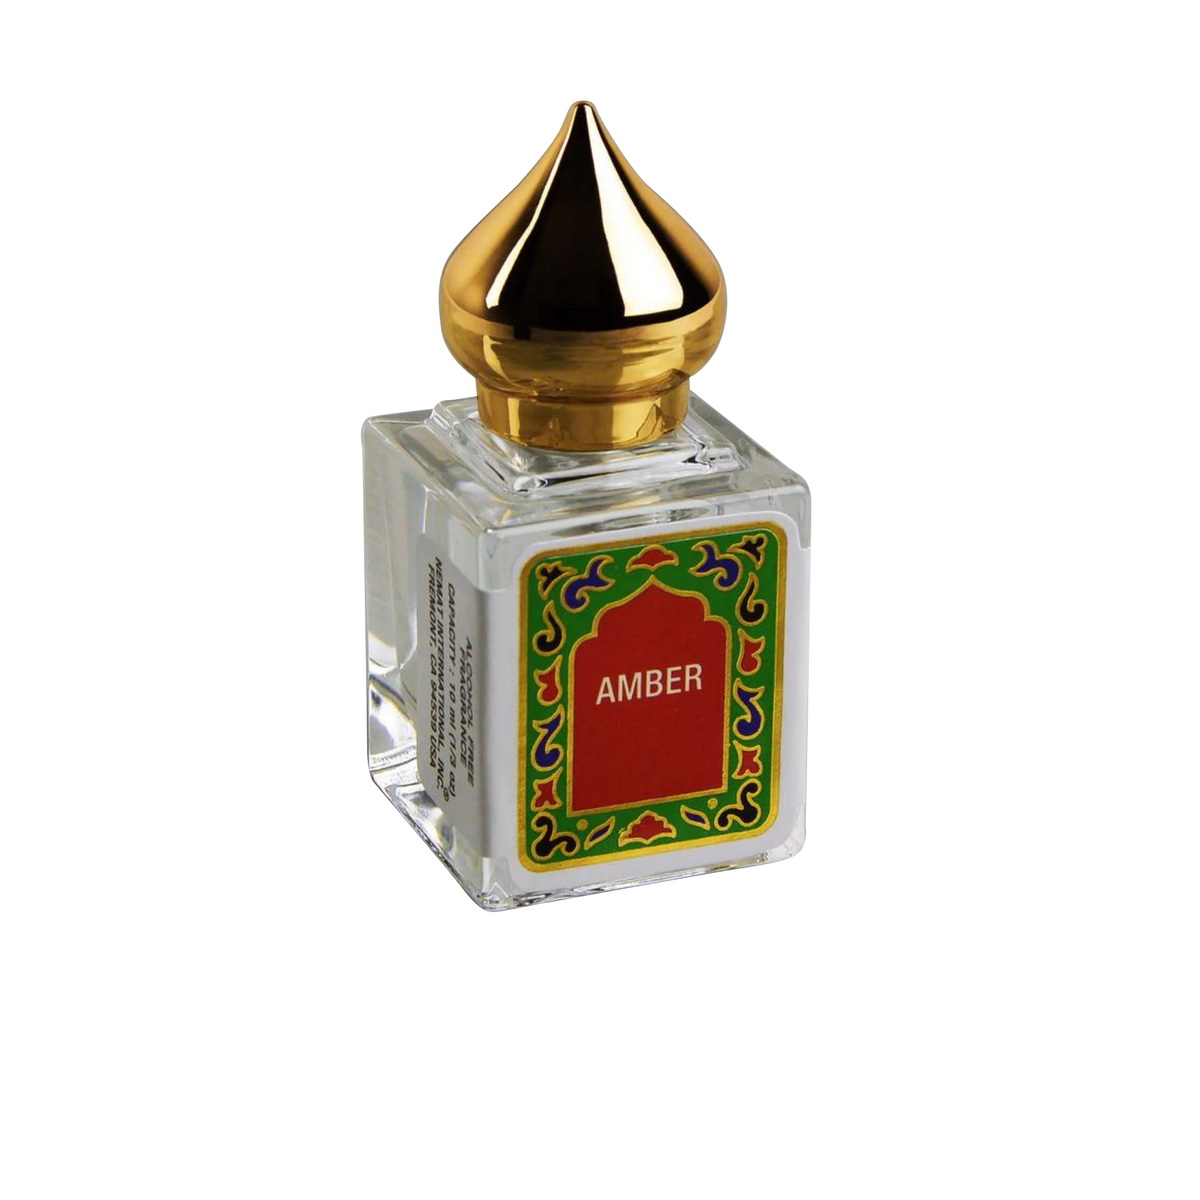 Primary image of Amber Fragrance Minaret Cap